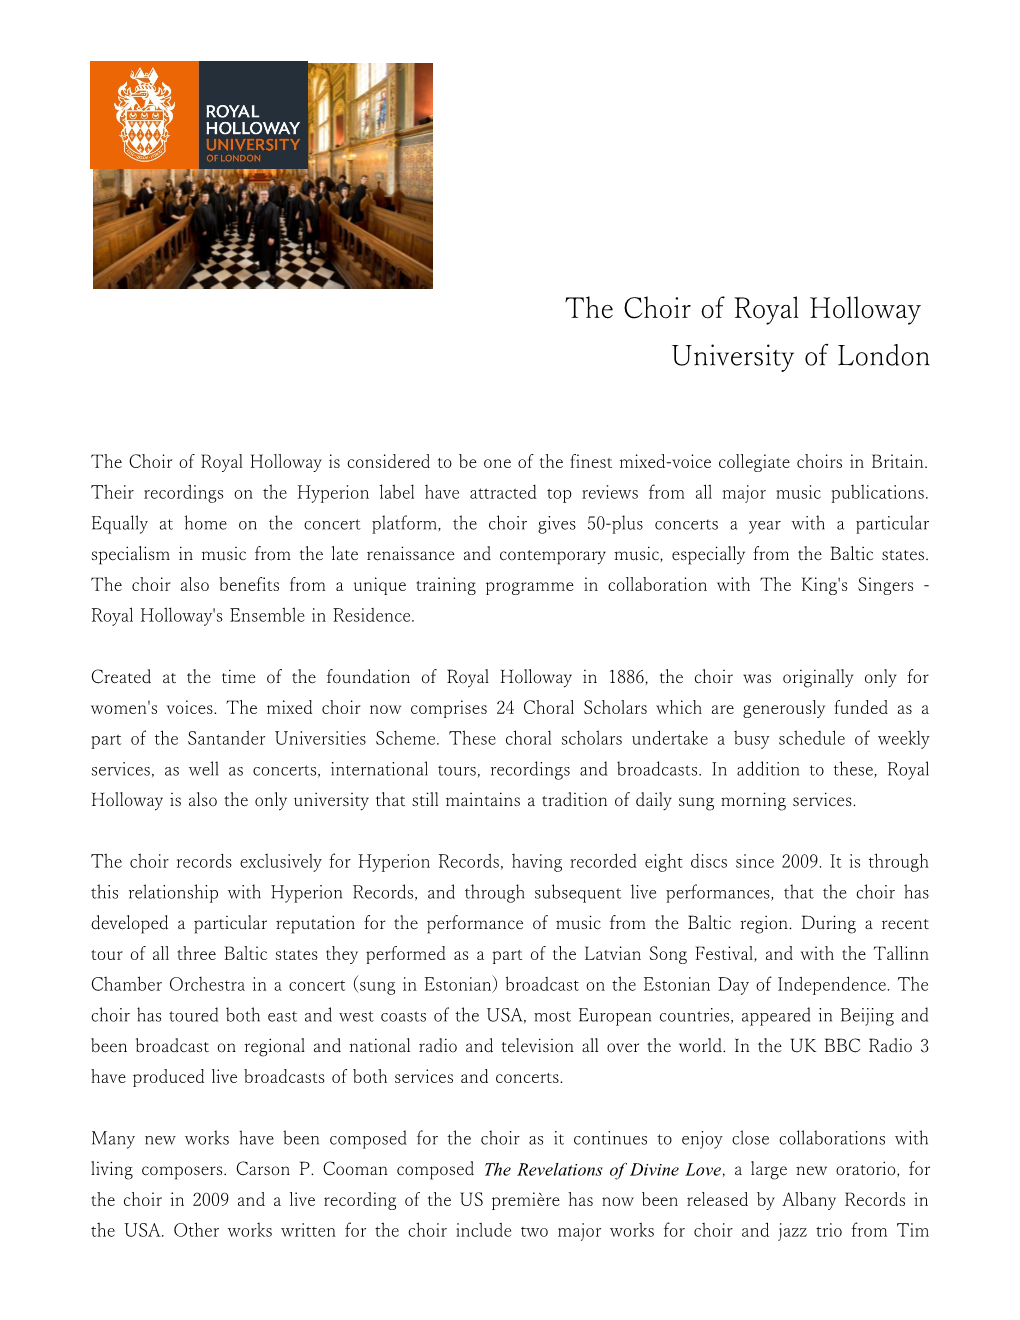 The Choir of Royal Holloway, University of London